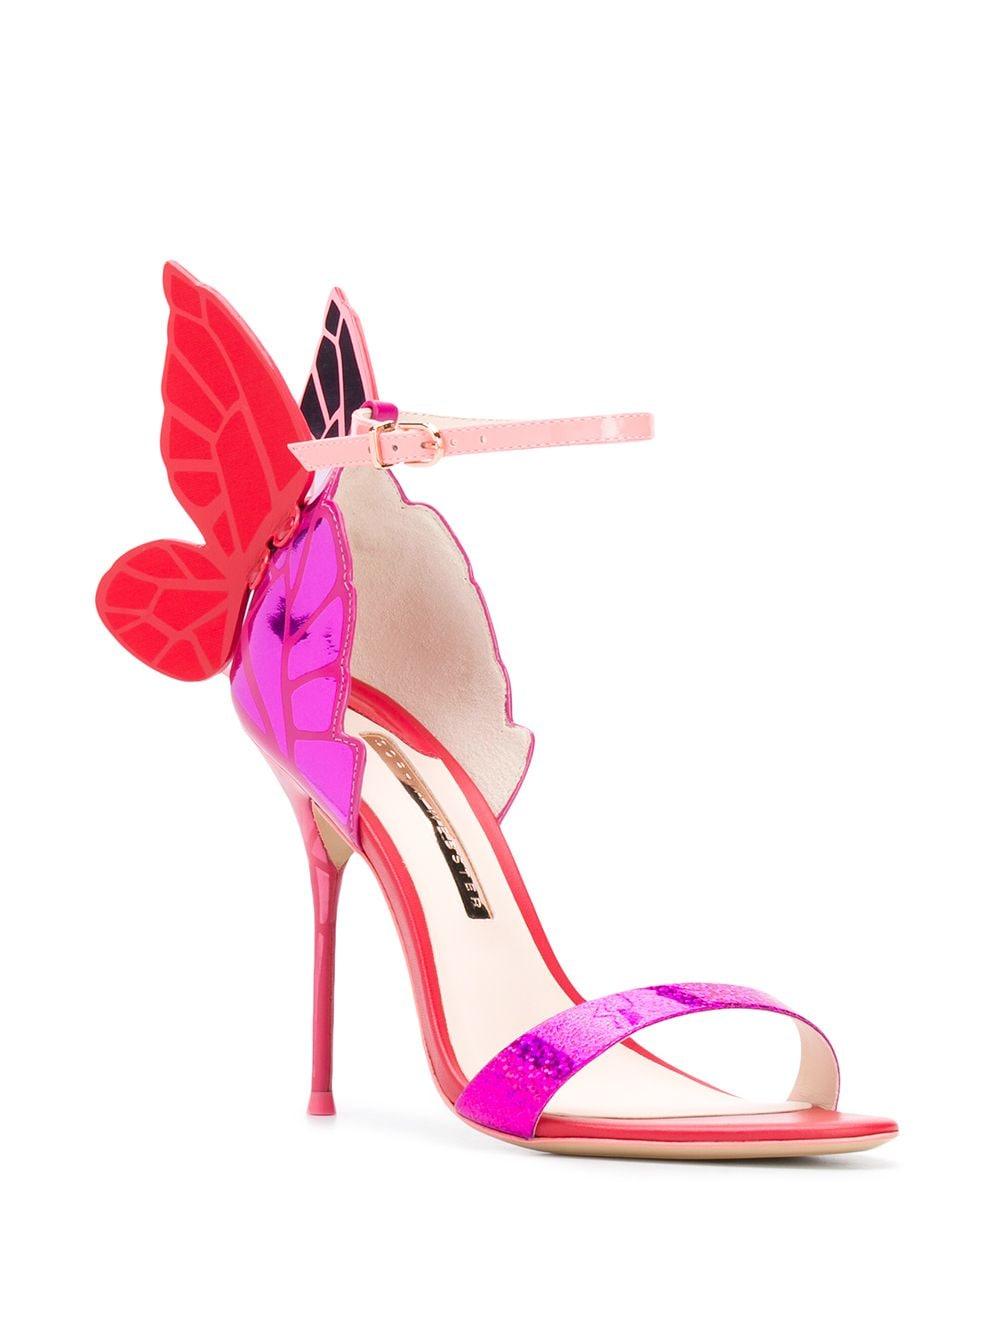 Sophia Webster Leather Chiara 95mm Sandals in Pink - Lyst